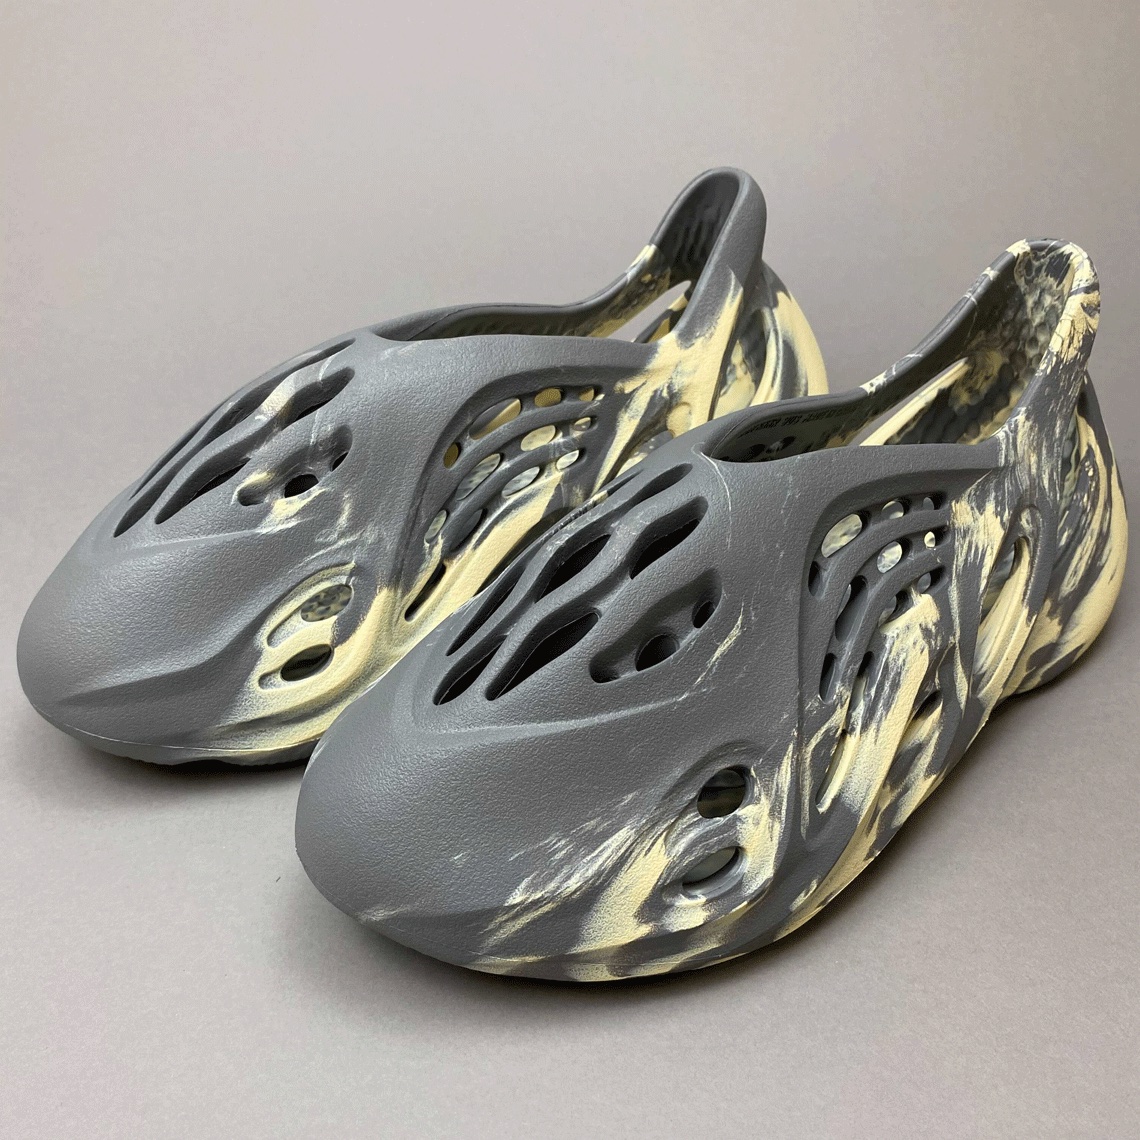 adidas Yeezy Foam Runner MXT Moon Grey GV7904 | SneakerNews.com